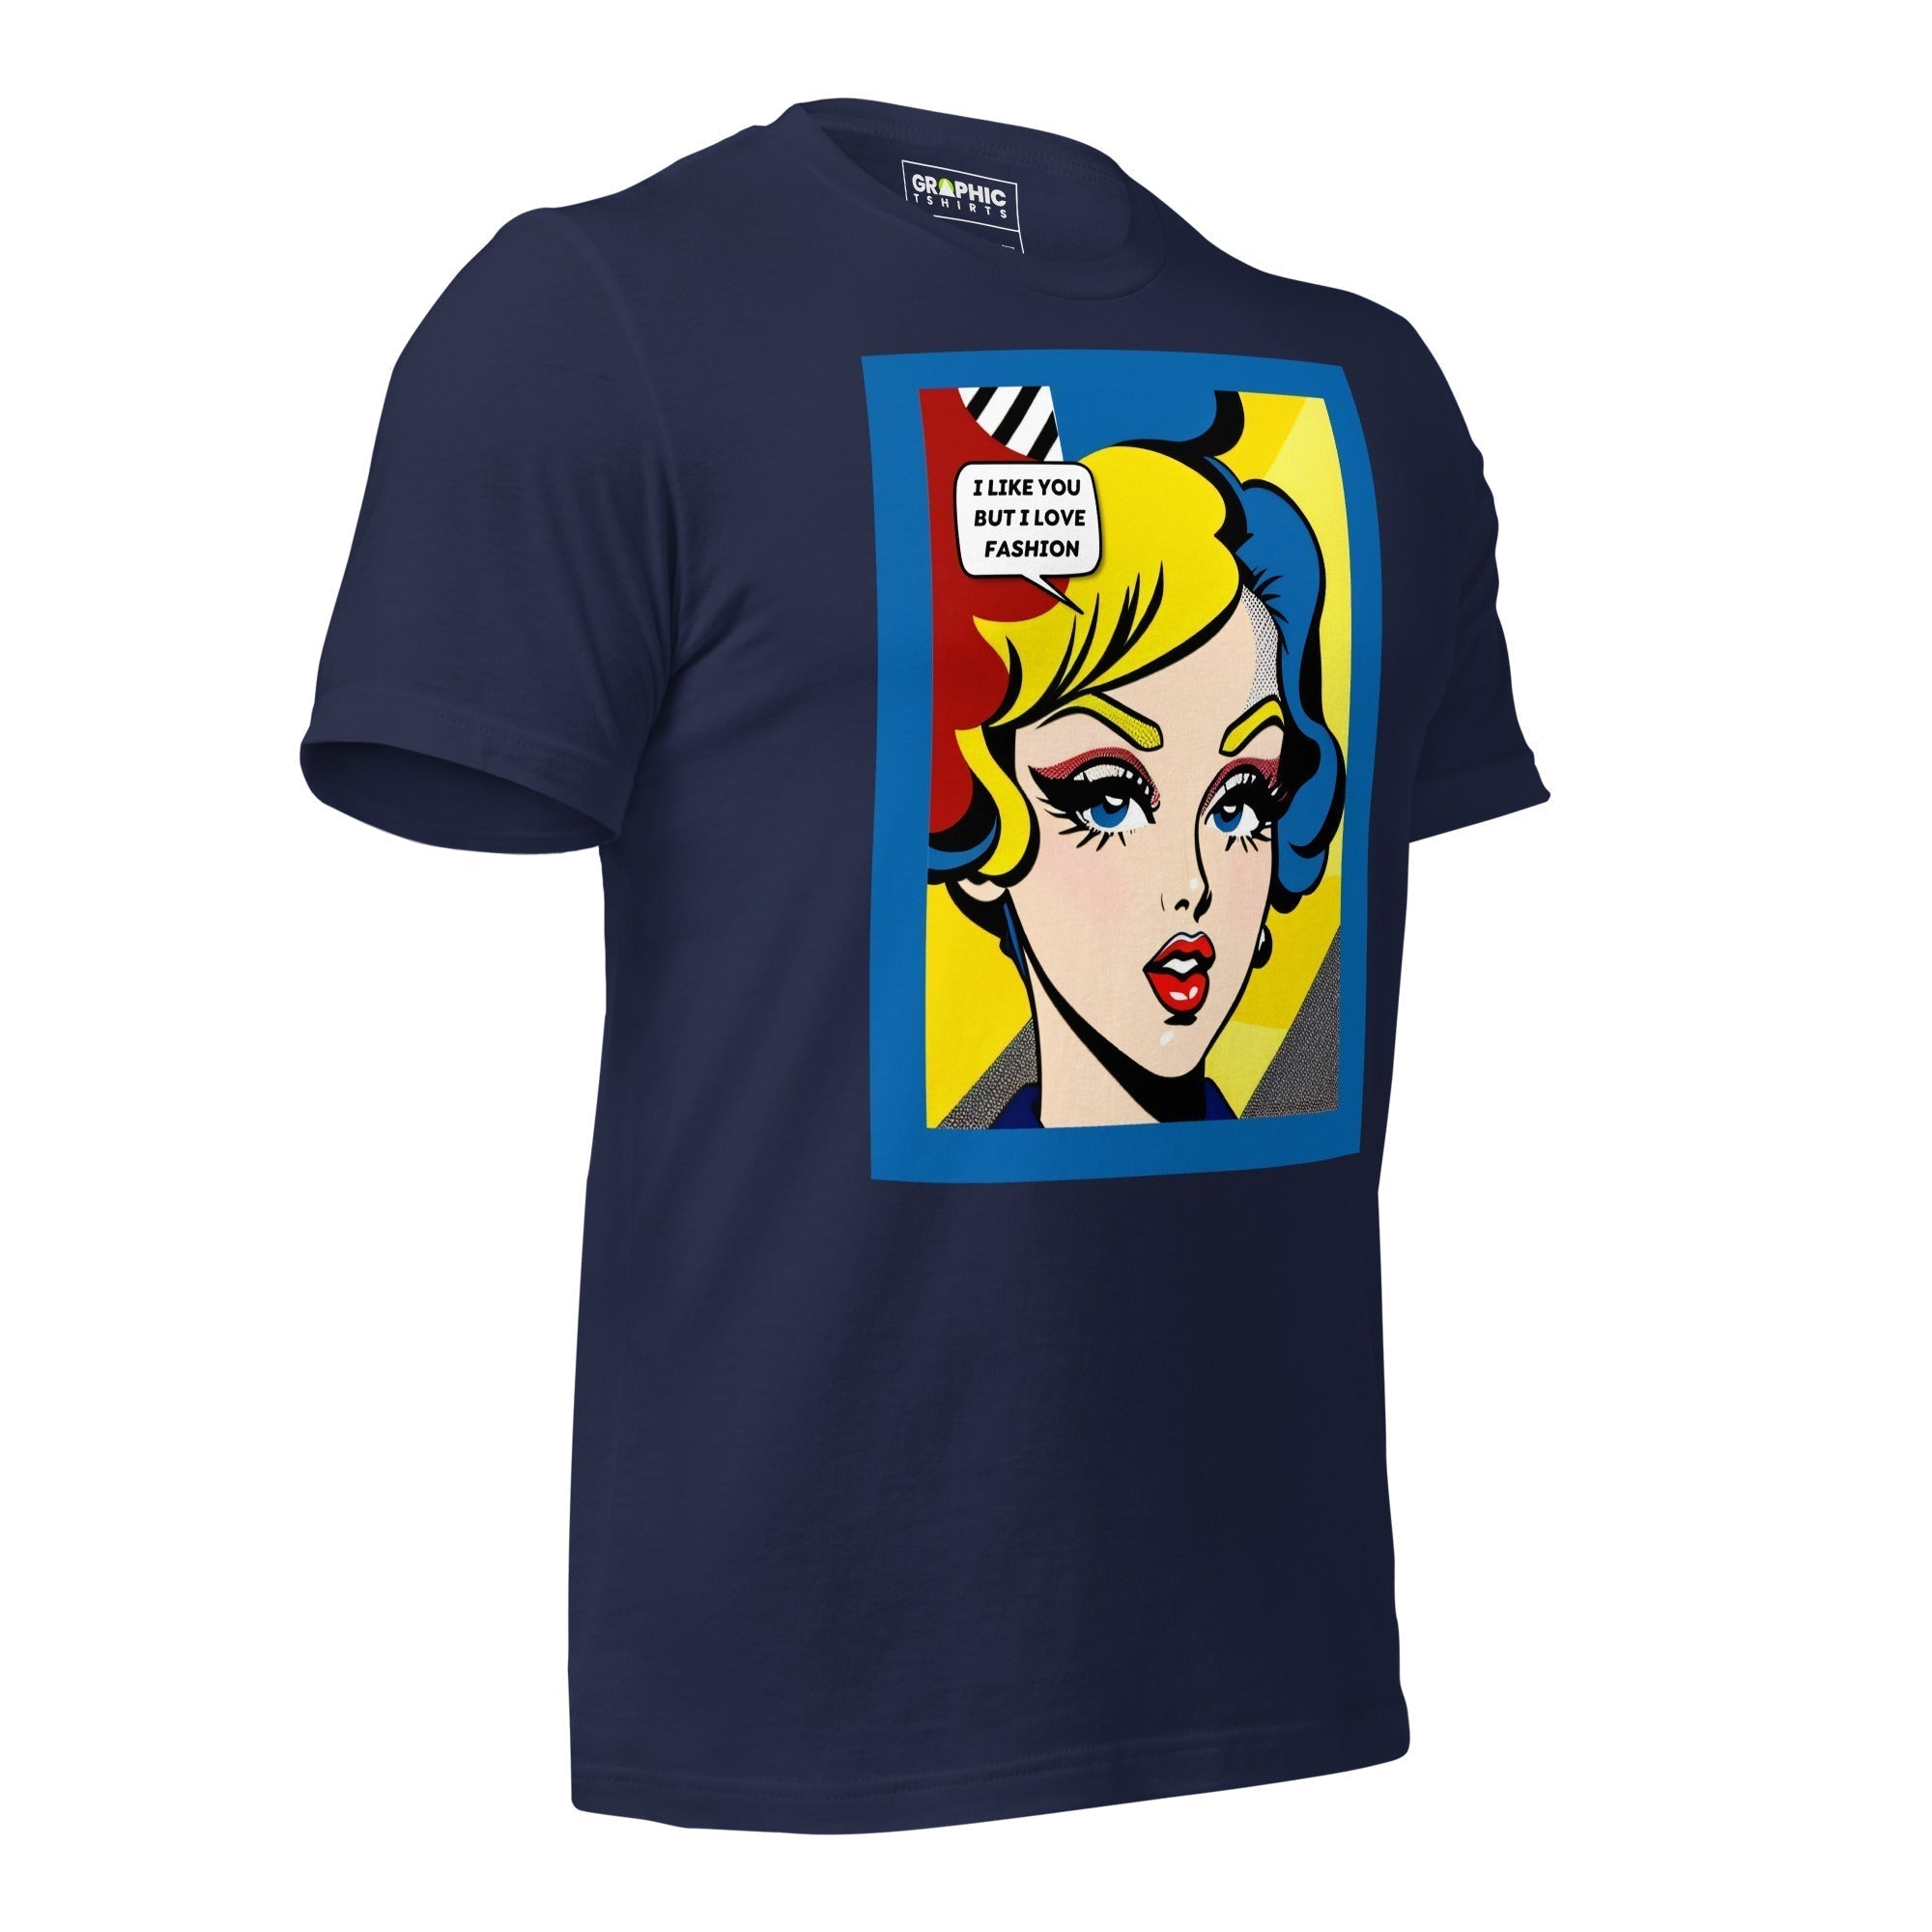 Unisex Crew Neck T-Shirt - Vintage American Comic Series v.22 - GRAPHIC T-SHIRTS